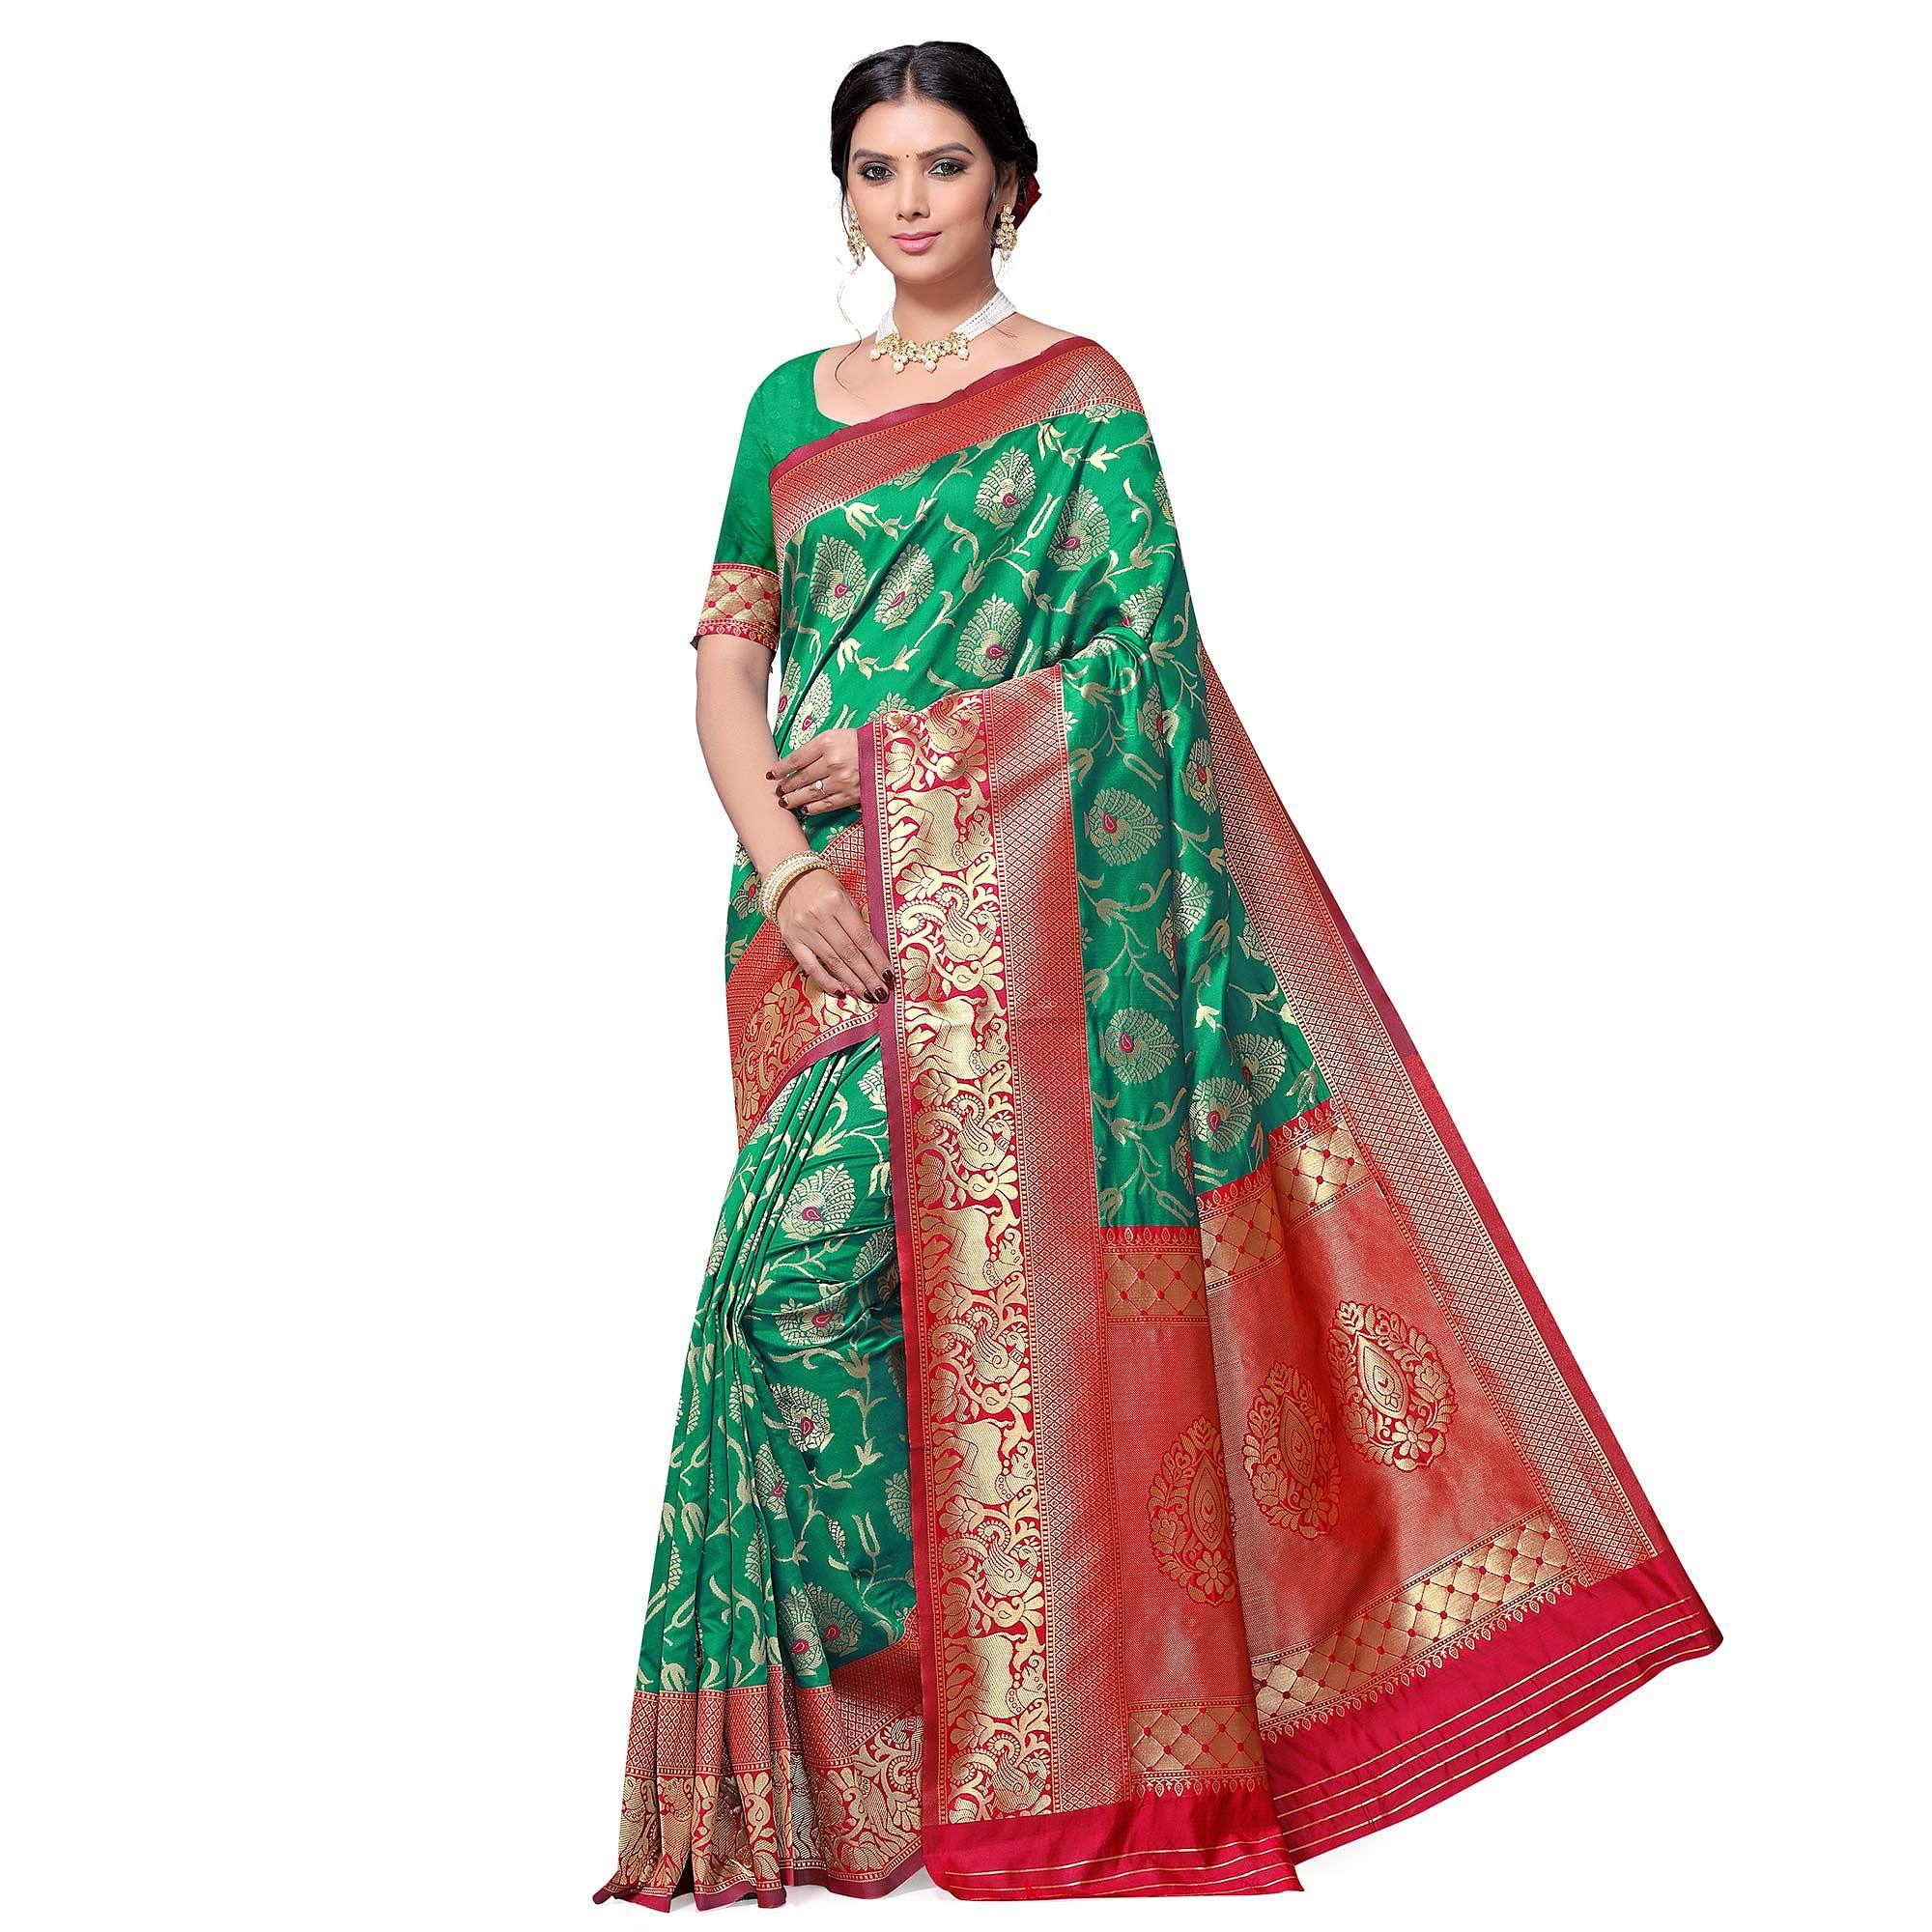 Groovy Green Colored Festive Wear woven Kota Lichi Banarasi Silk Saree - Peachmode